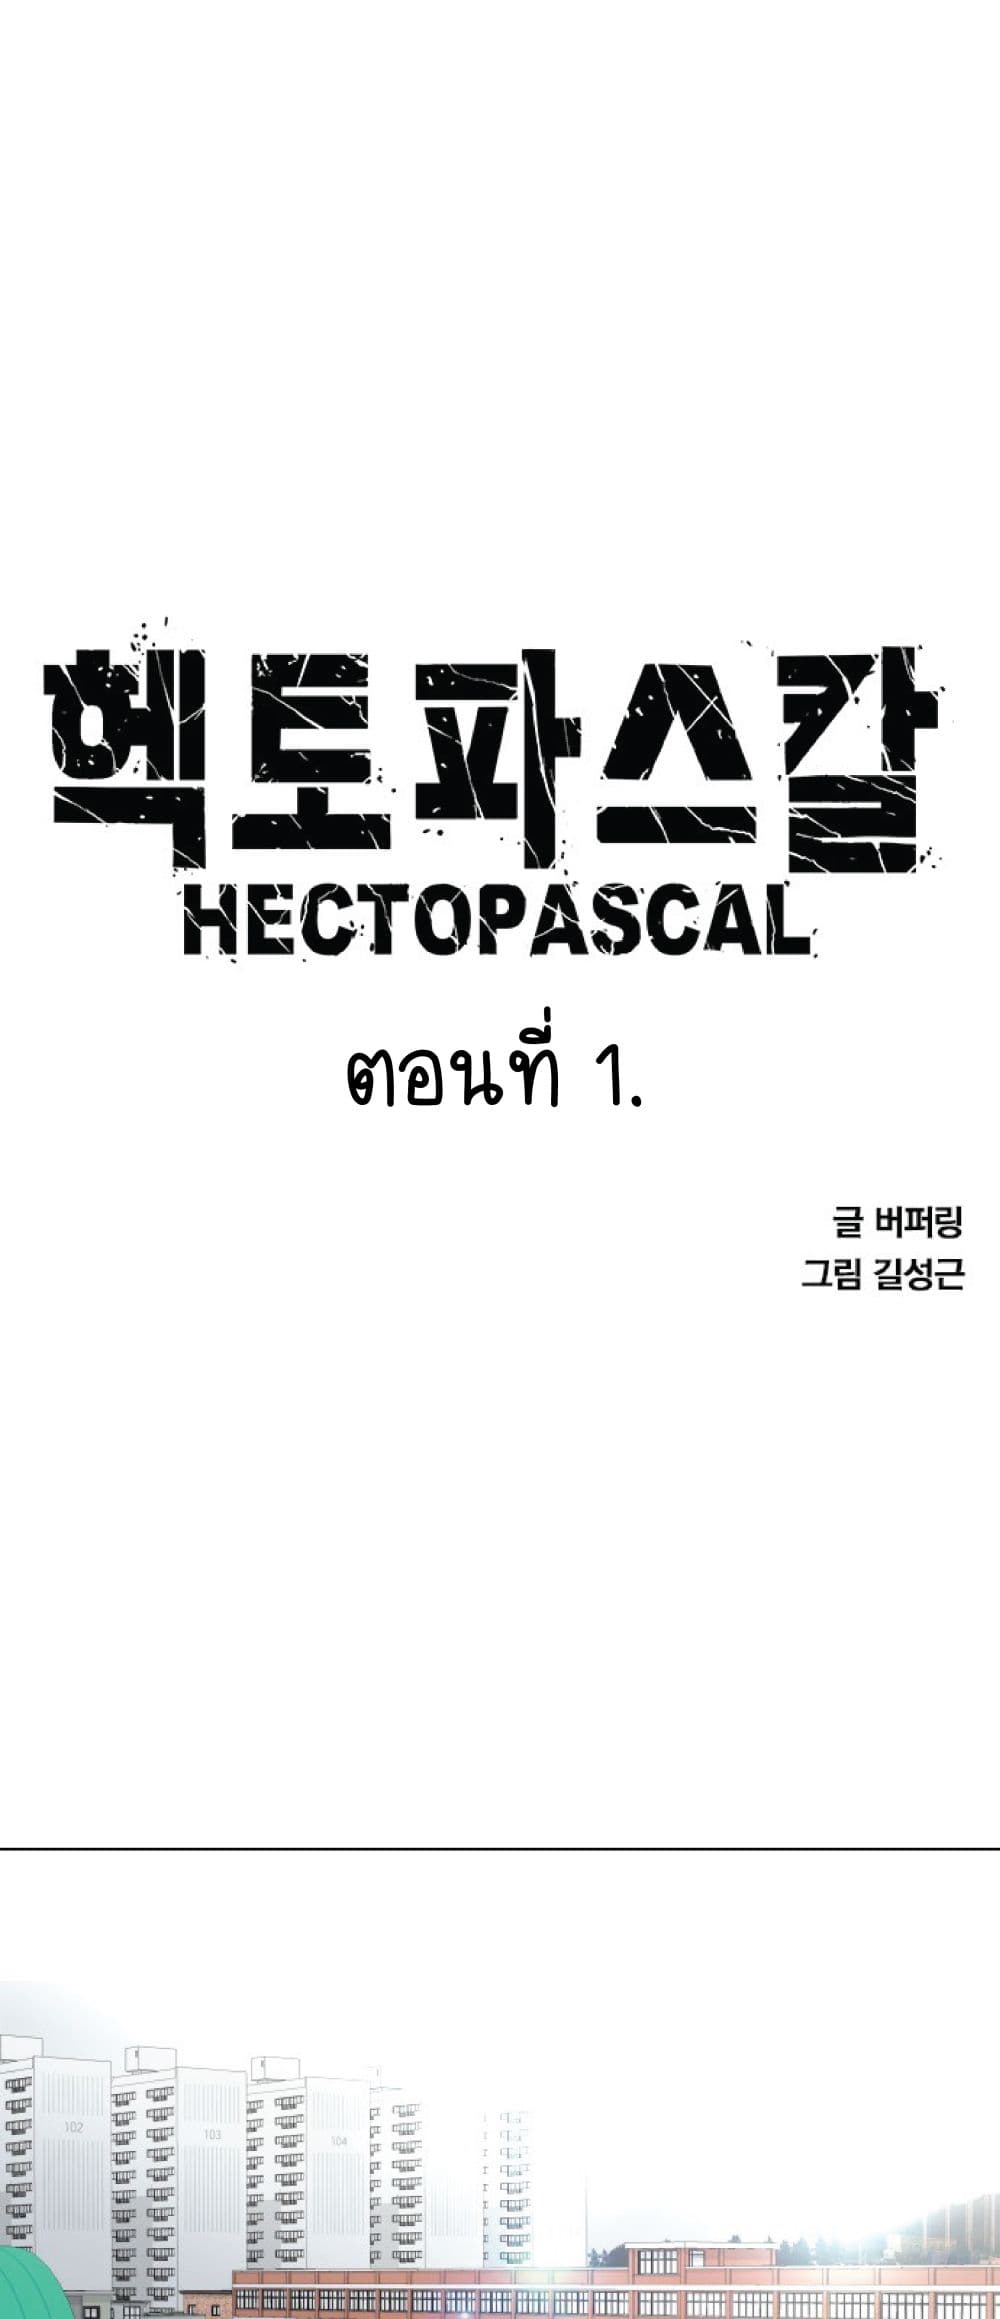 Hectopascals 1-1